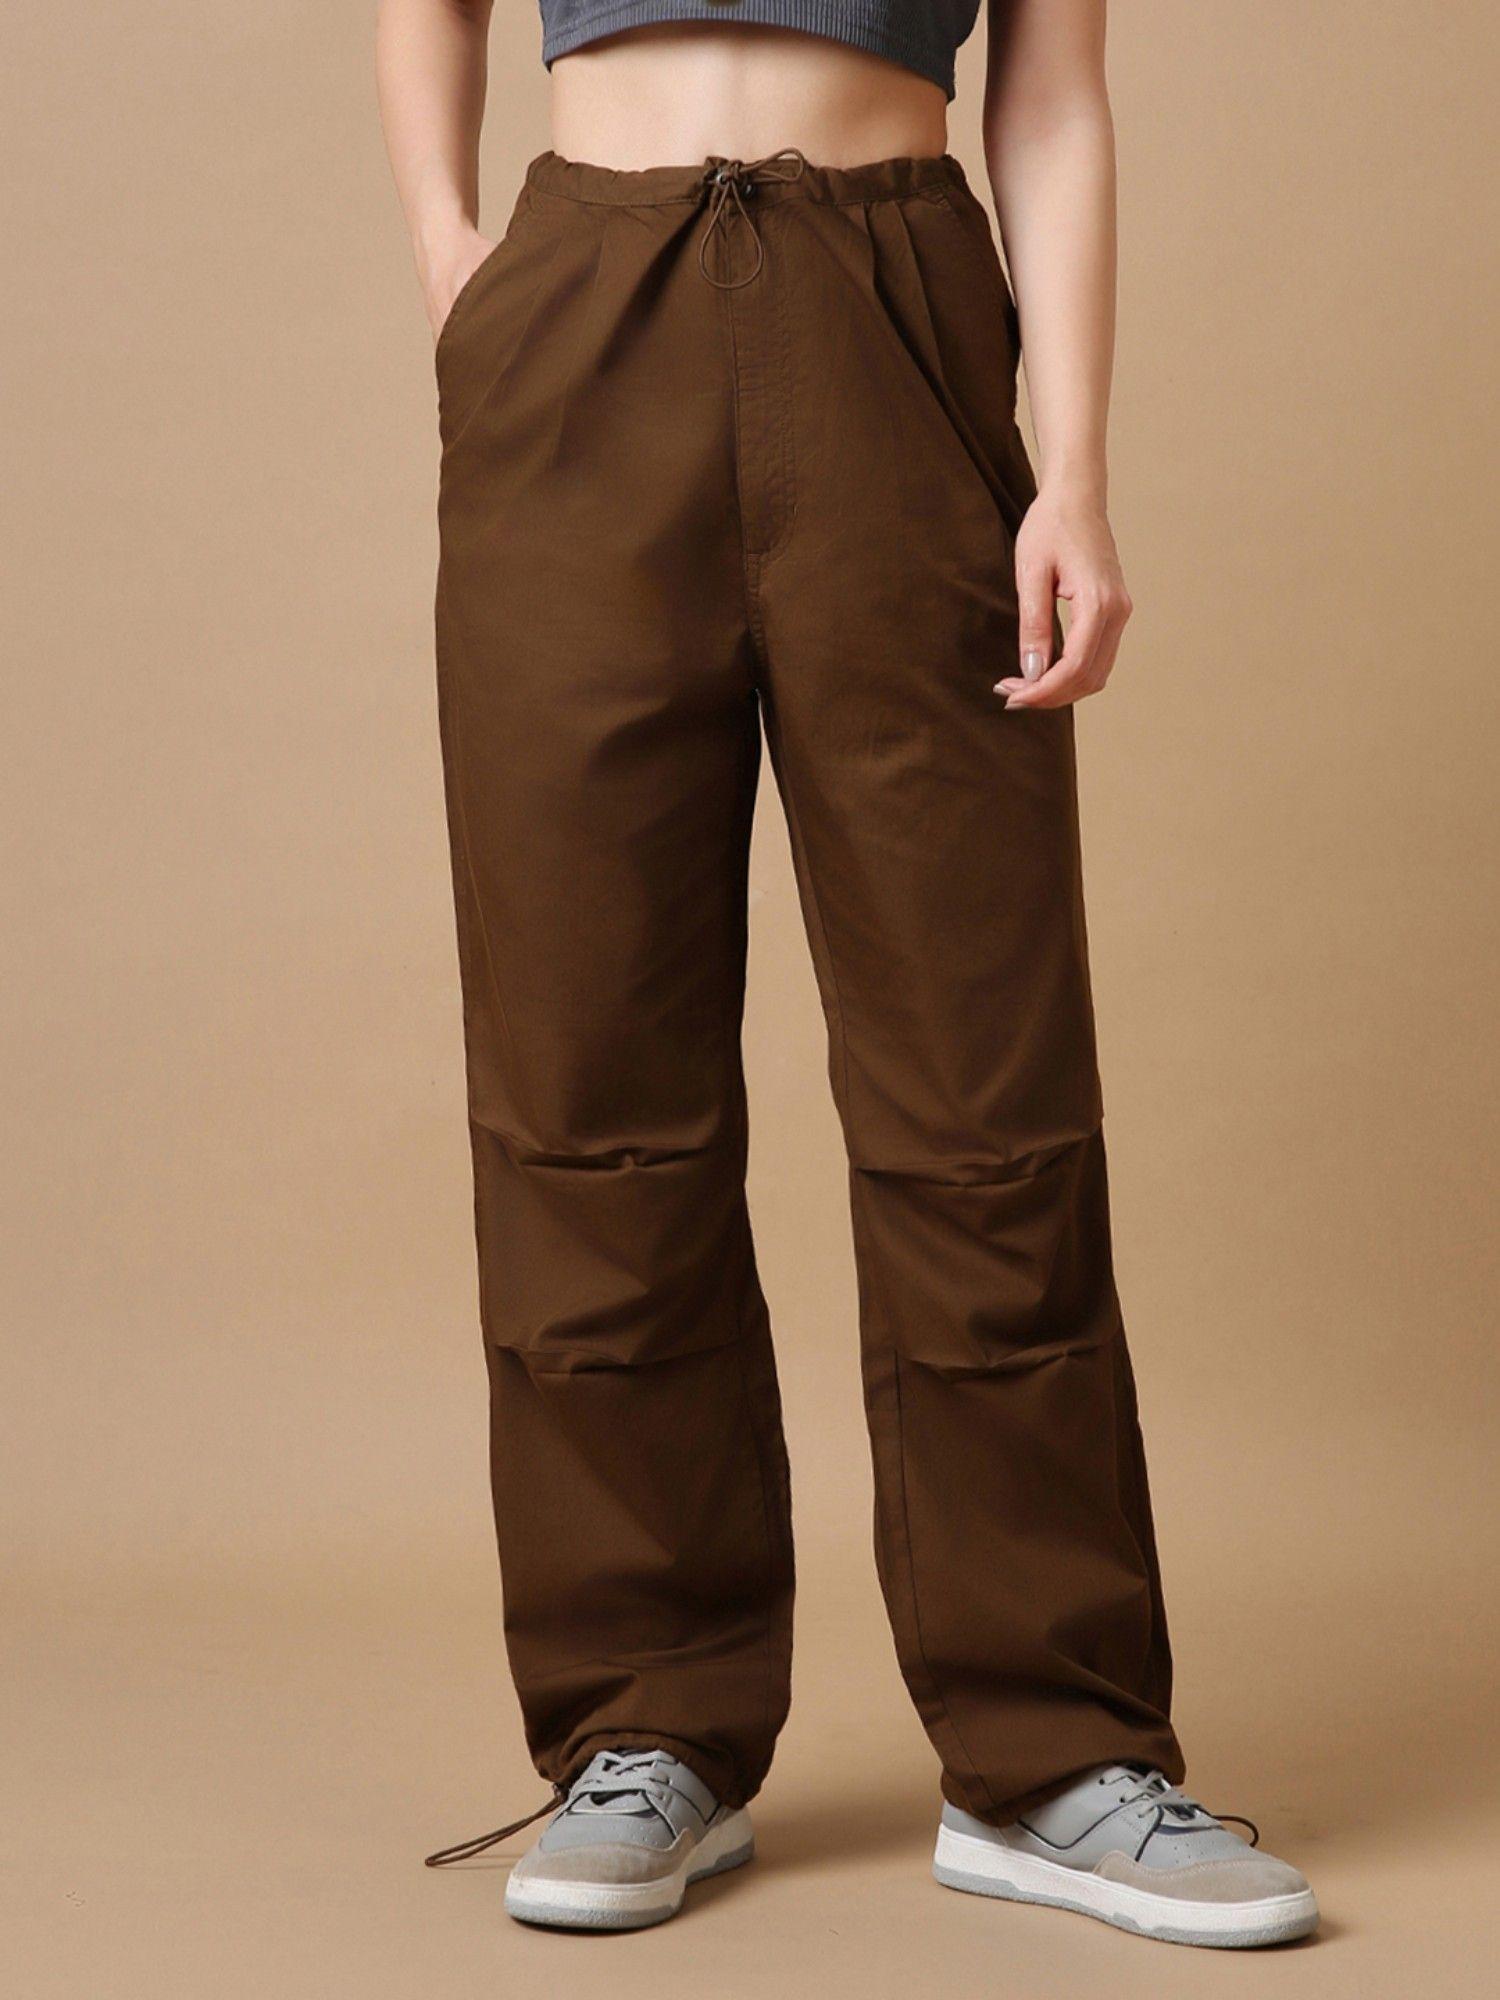 x womens brown oversized parachute pants